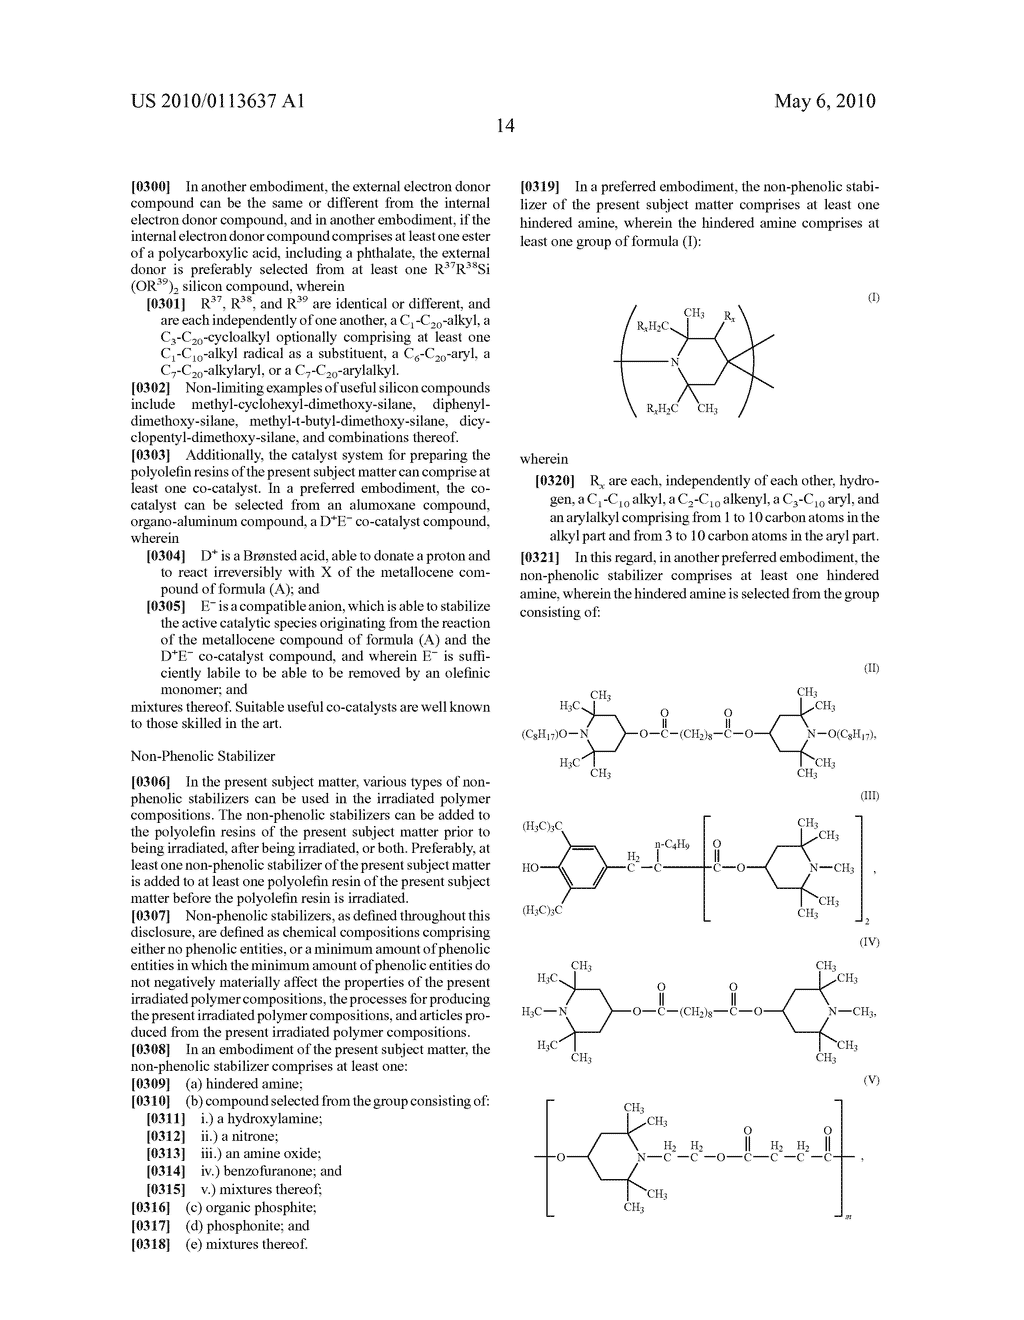 IRRADIATED POLYOLEFIN COMPOSITION COMPRISING A NON-PHENOLIC STABILIZER - diagram, schematic, and image 15